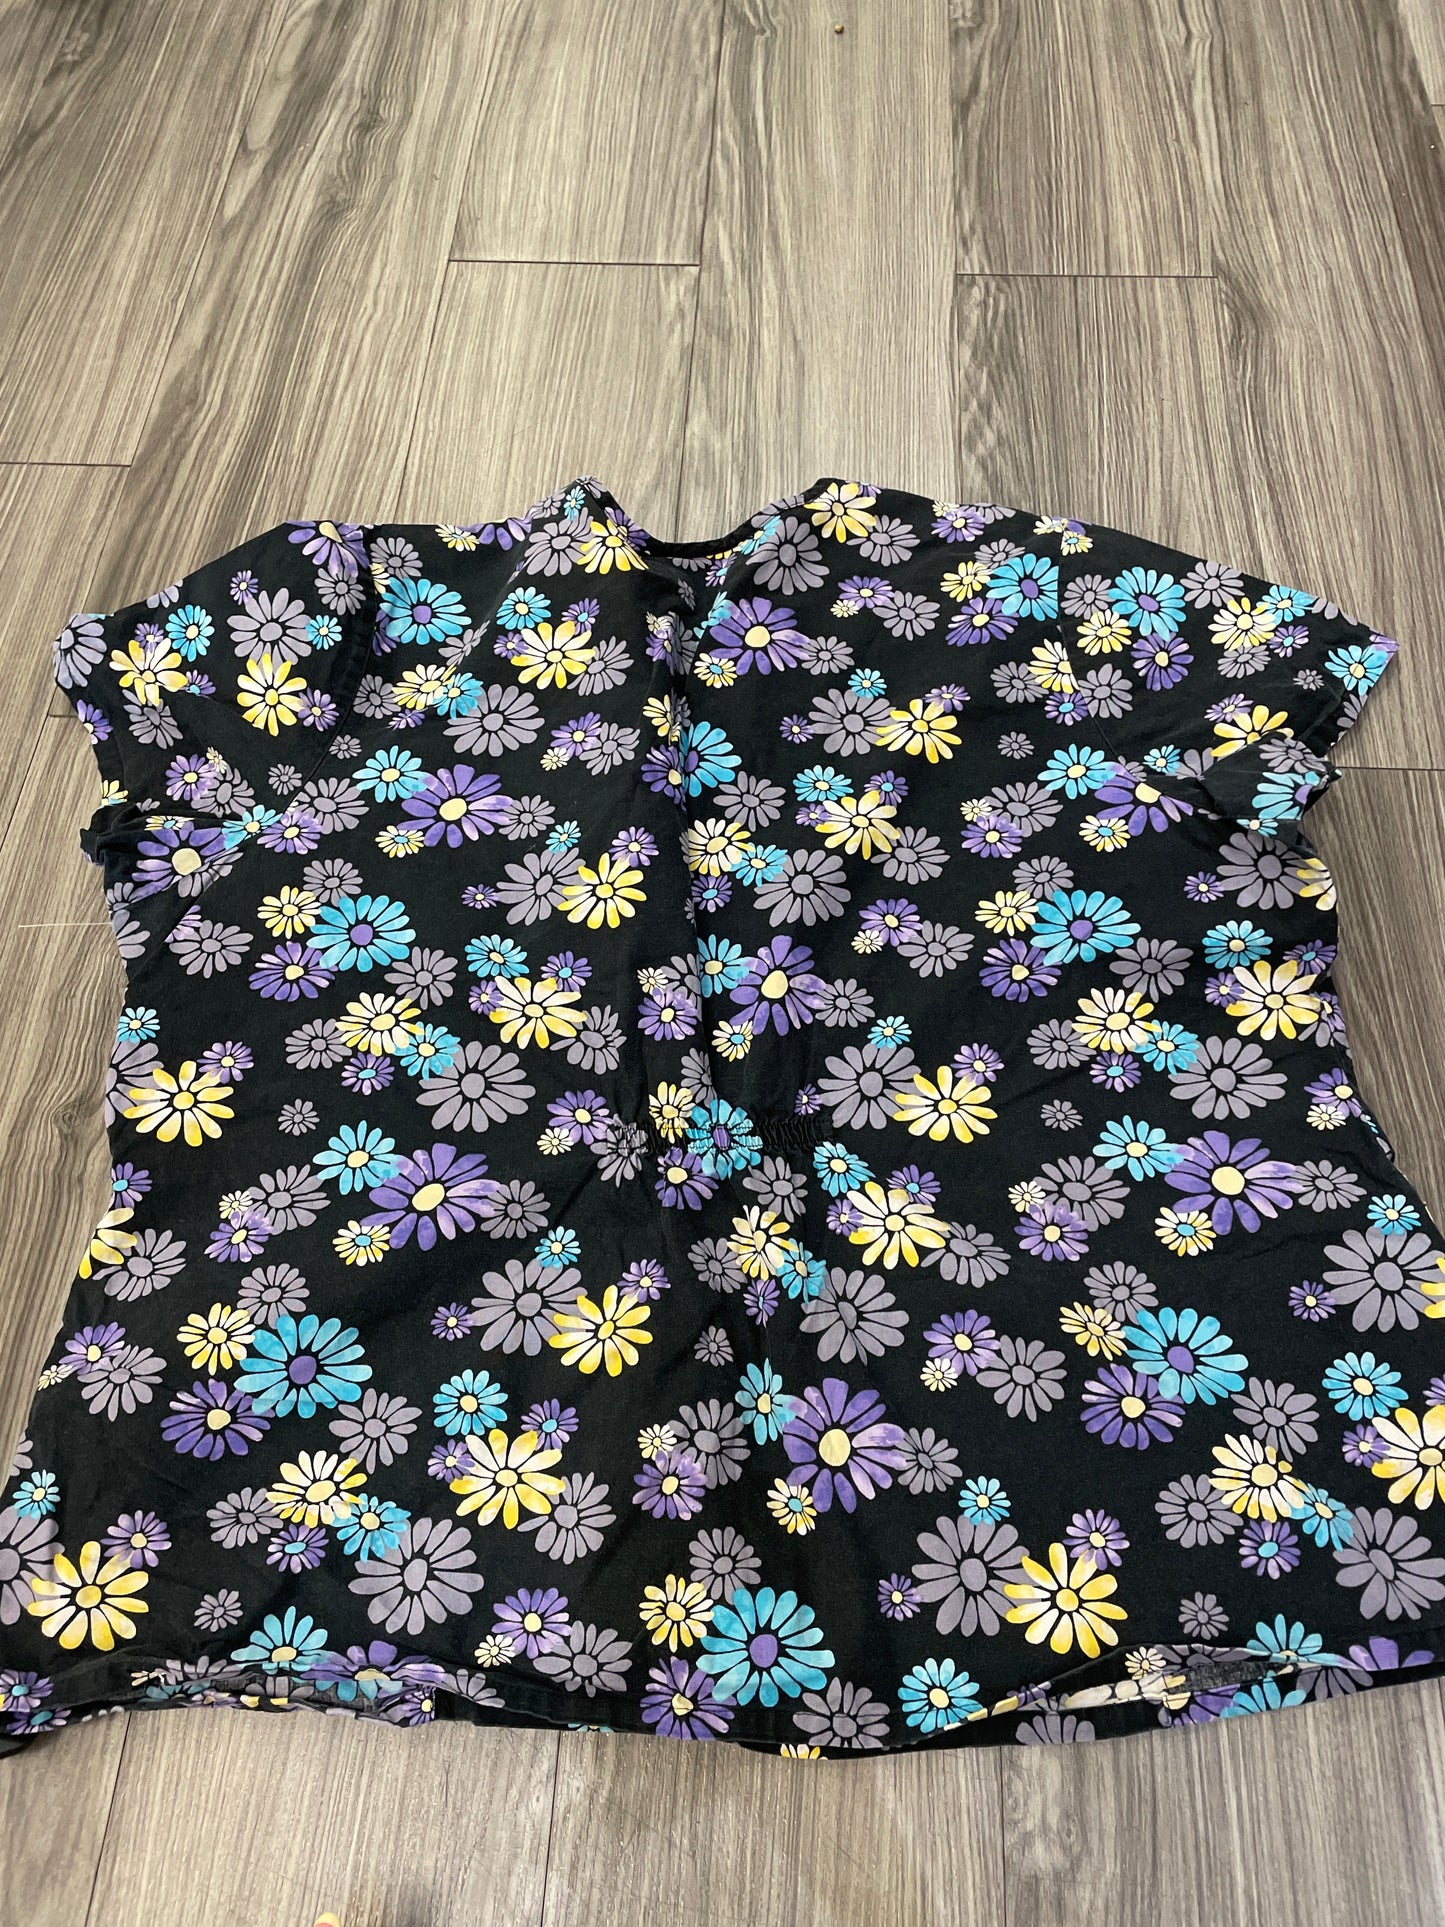 Floral Print Top Short Sleeve Scrubs, Size 2x